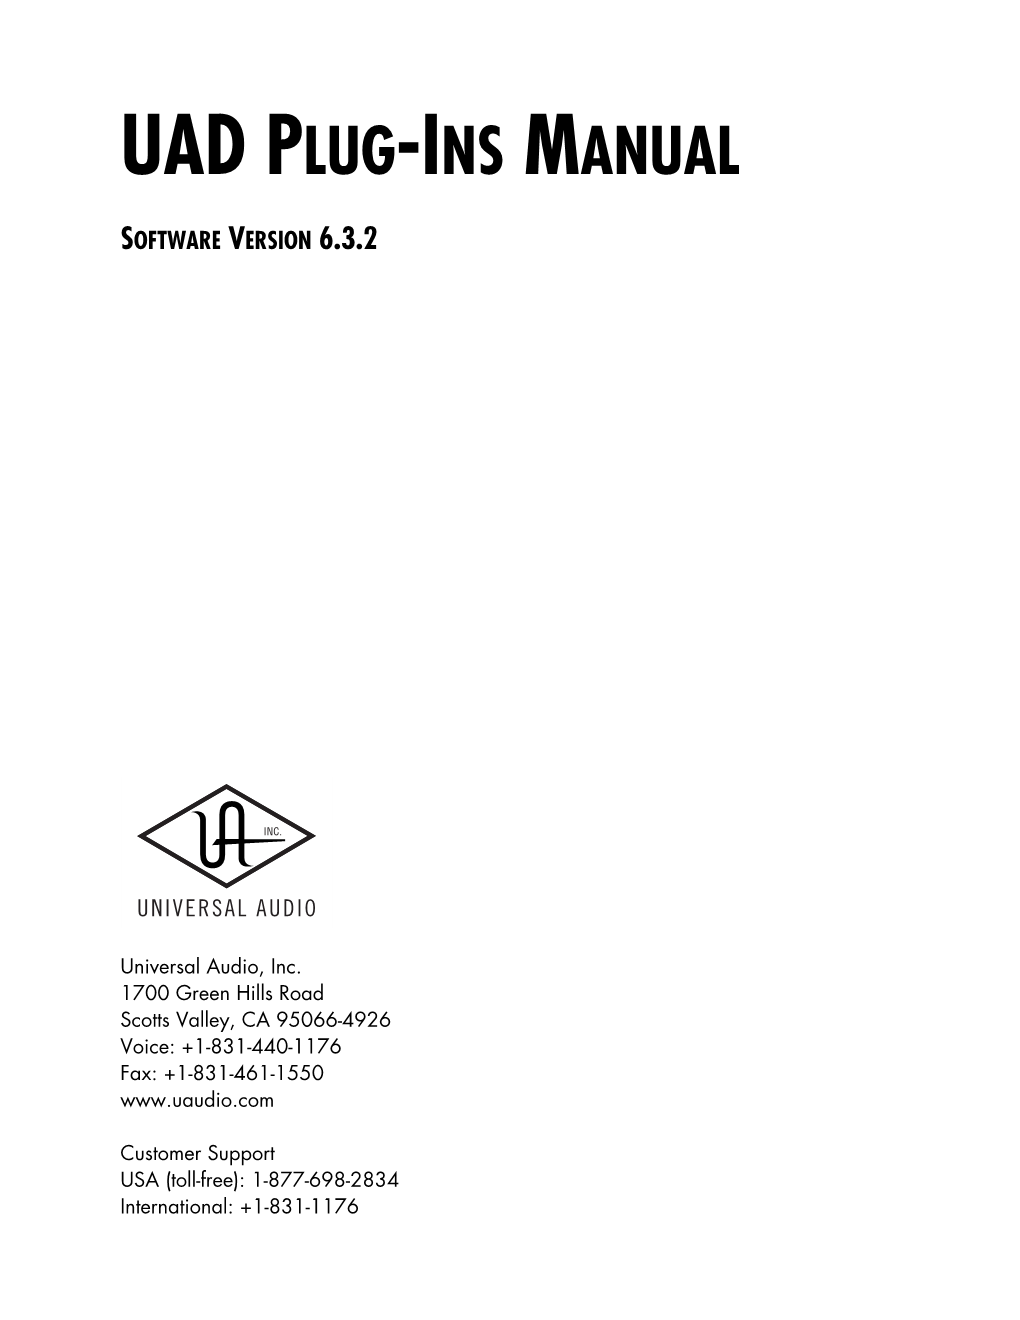 UAD Powered Plug-Ins Manual V6.3.2